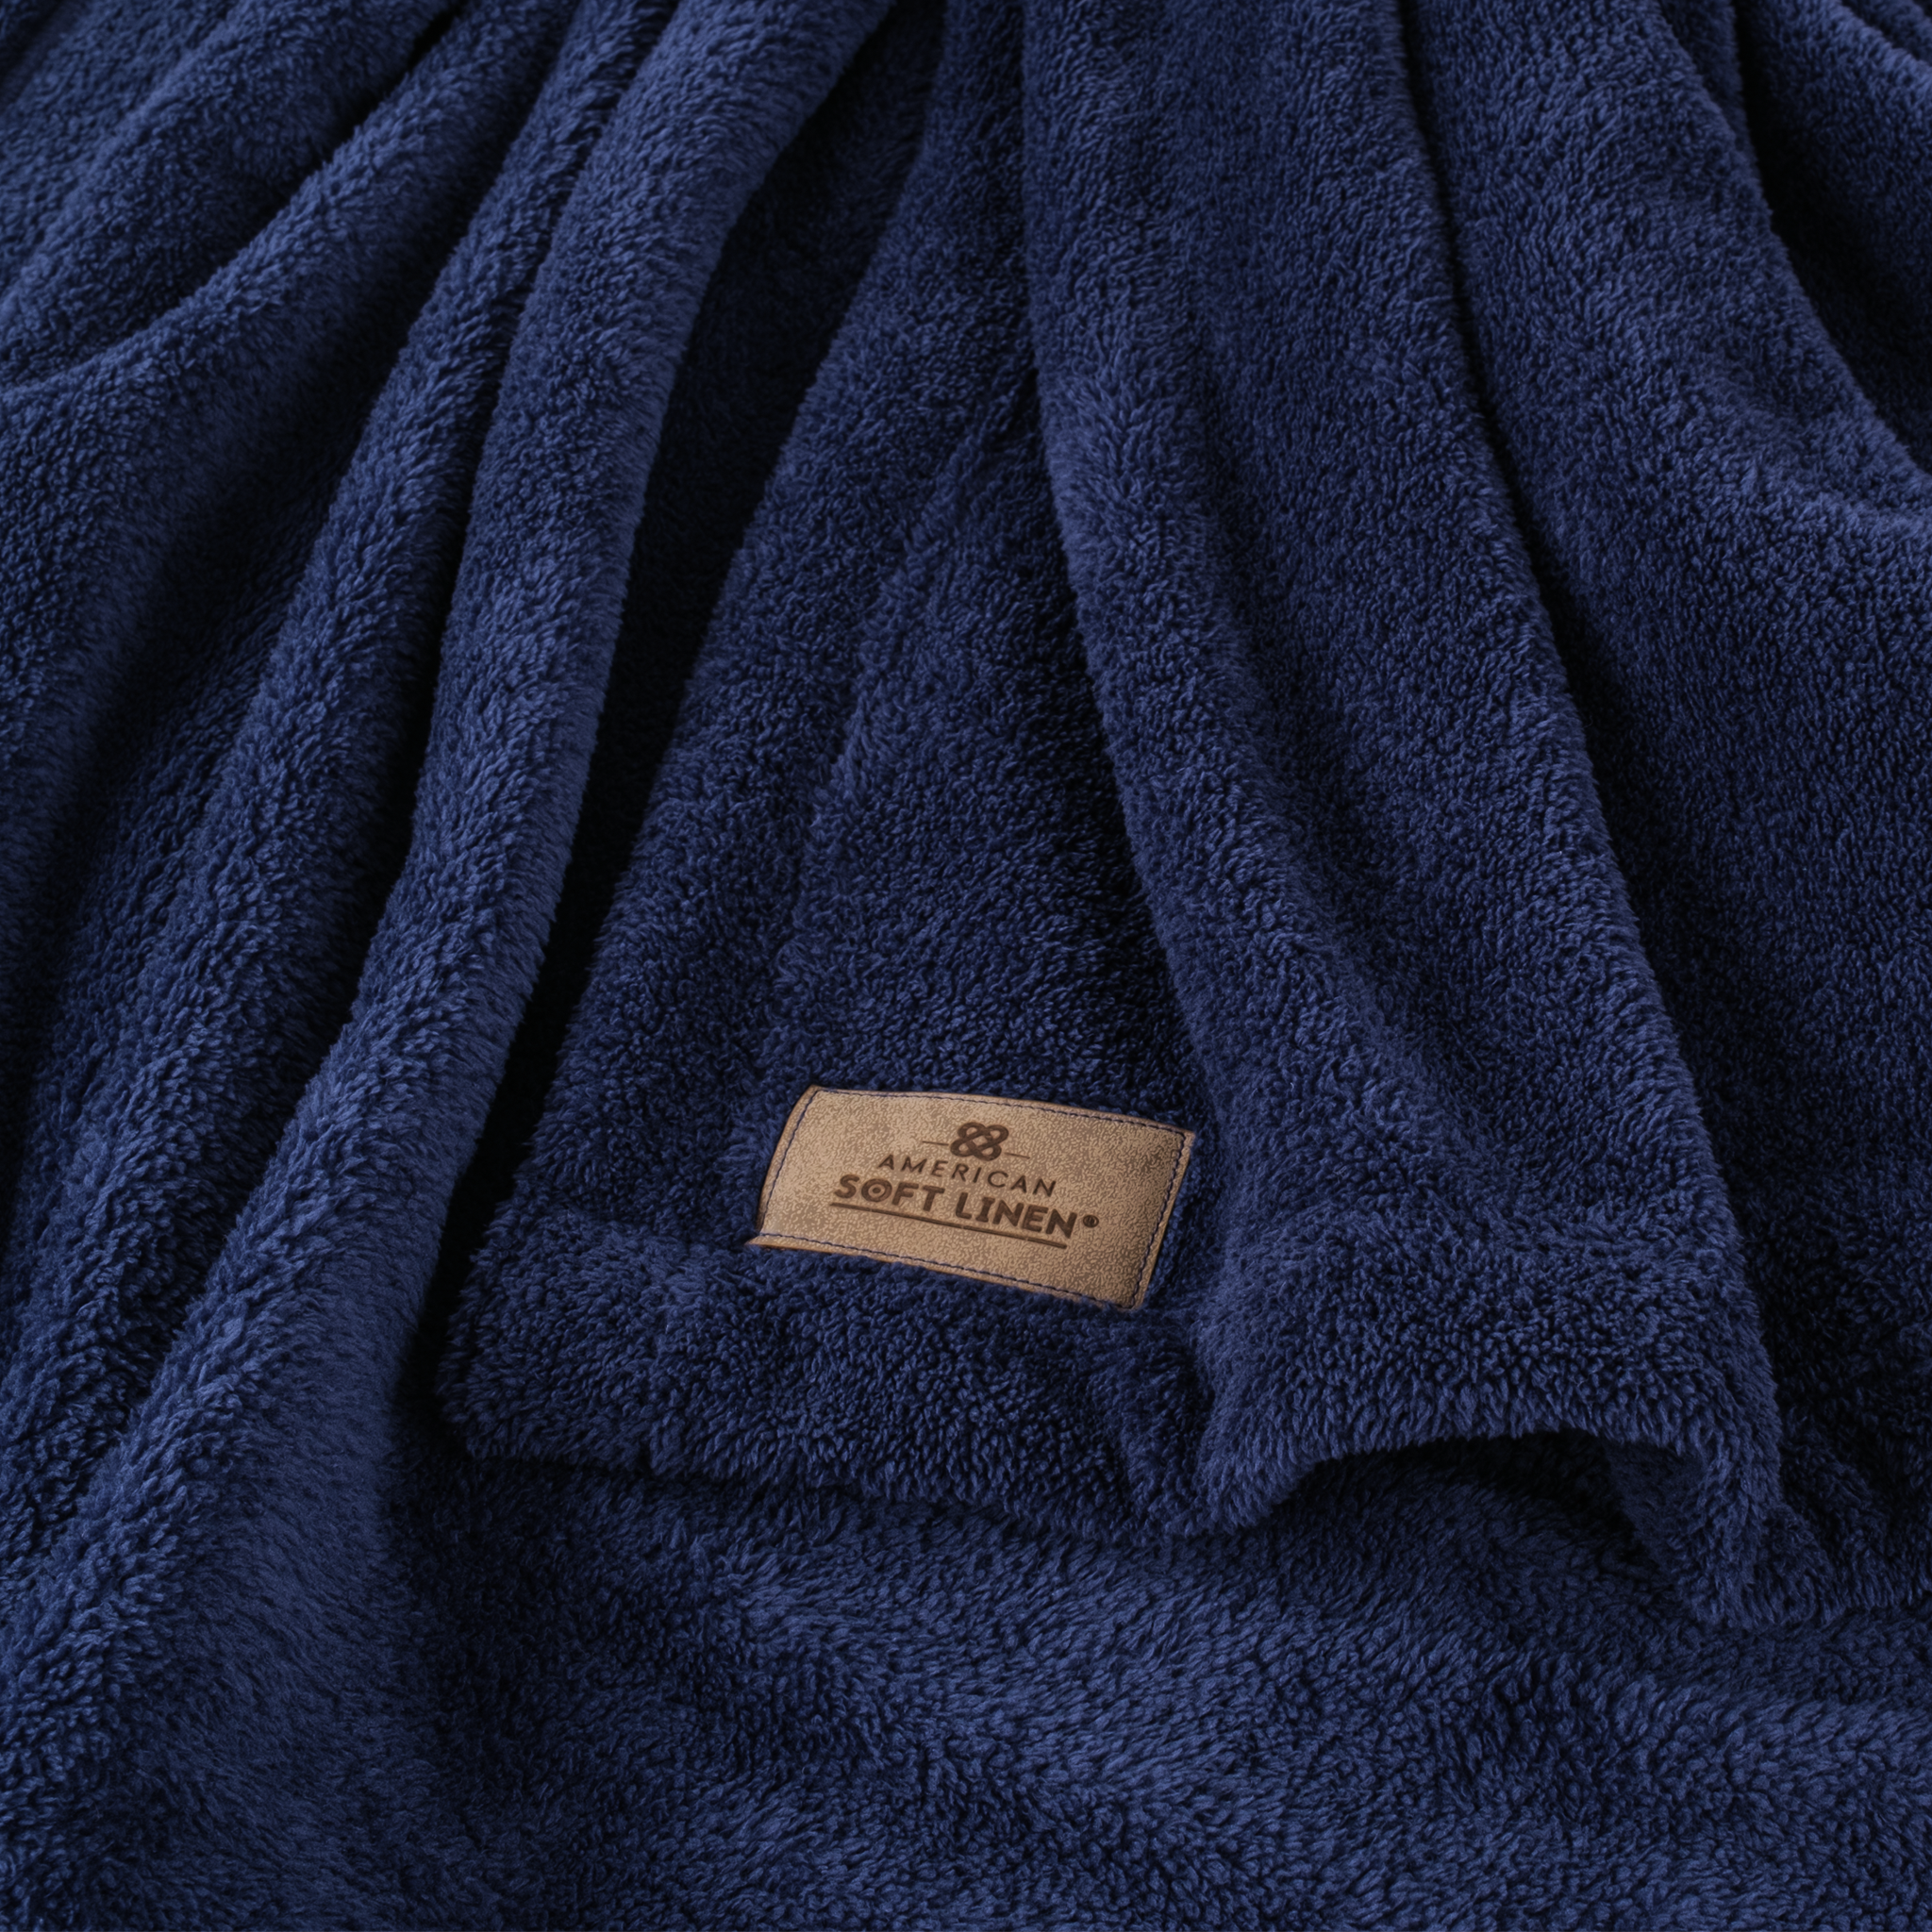 American Soft Linen - Bedding Fleece Blanket - Throw Size 50x60 inches - Navy-Blue - 4